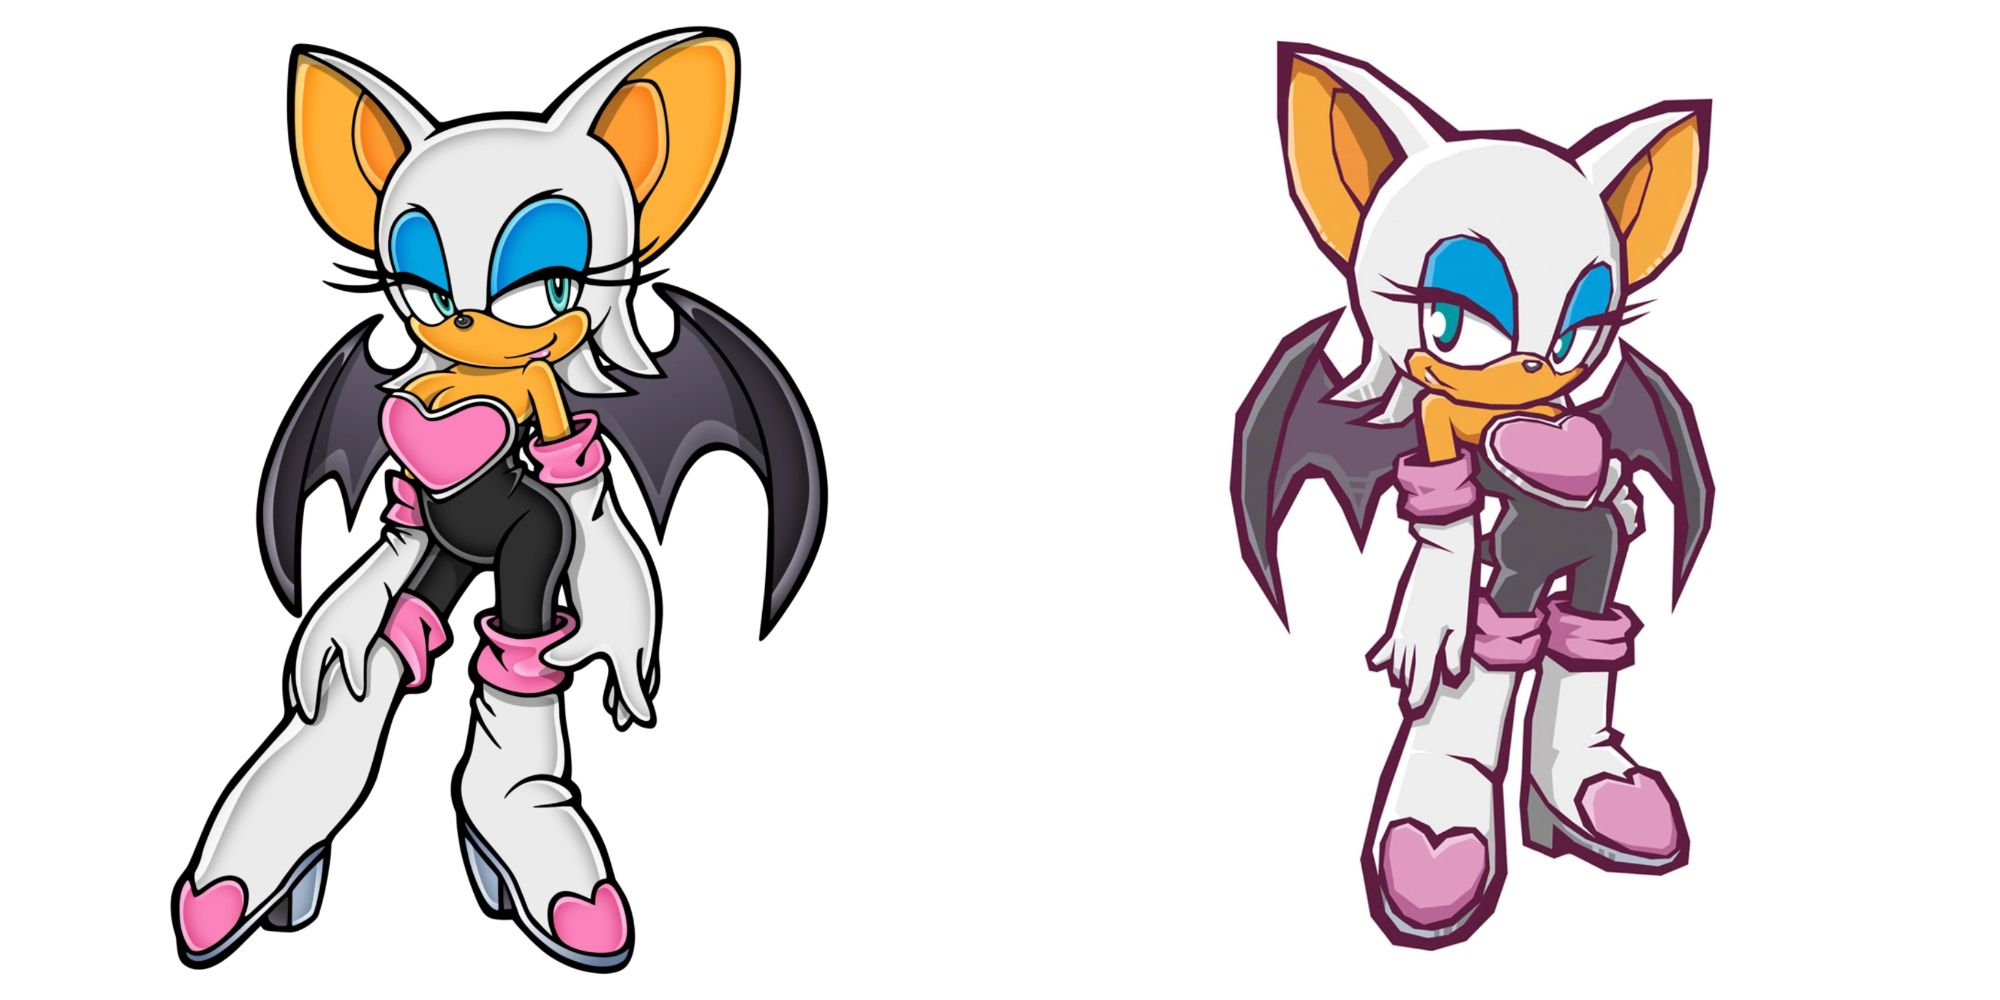 Sonic Rouge the Bat 2D Character Designs